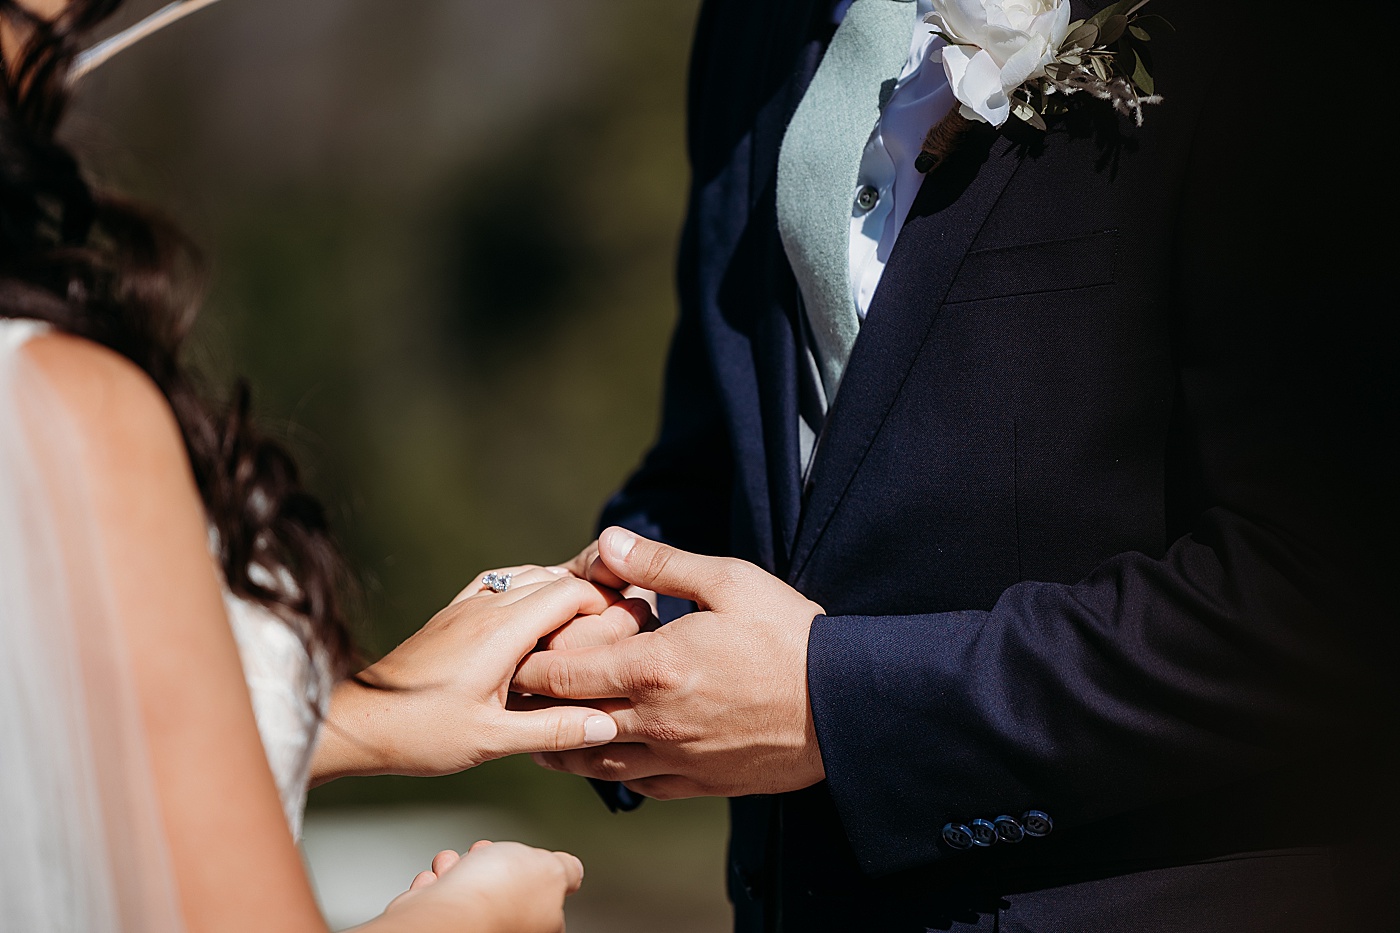 Brdie and groom exchanging rings | Megan Montalvo Photography